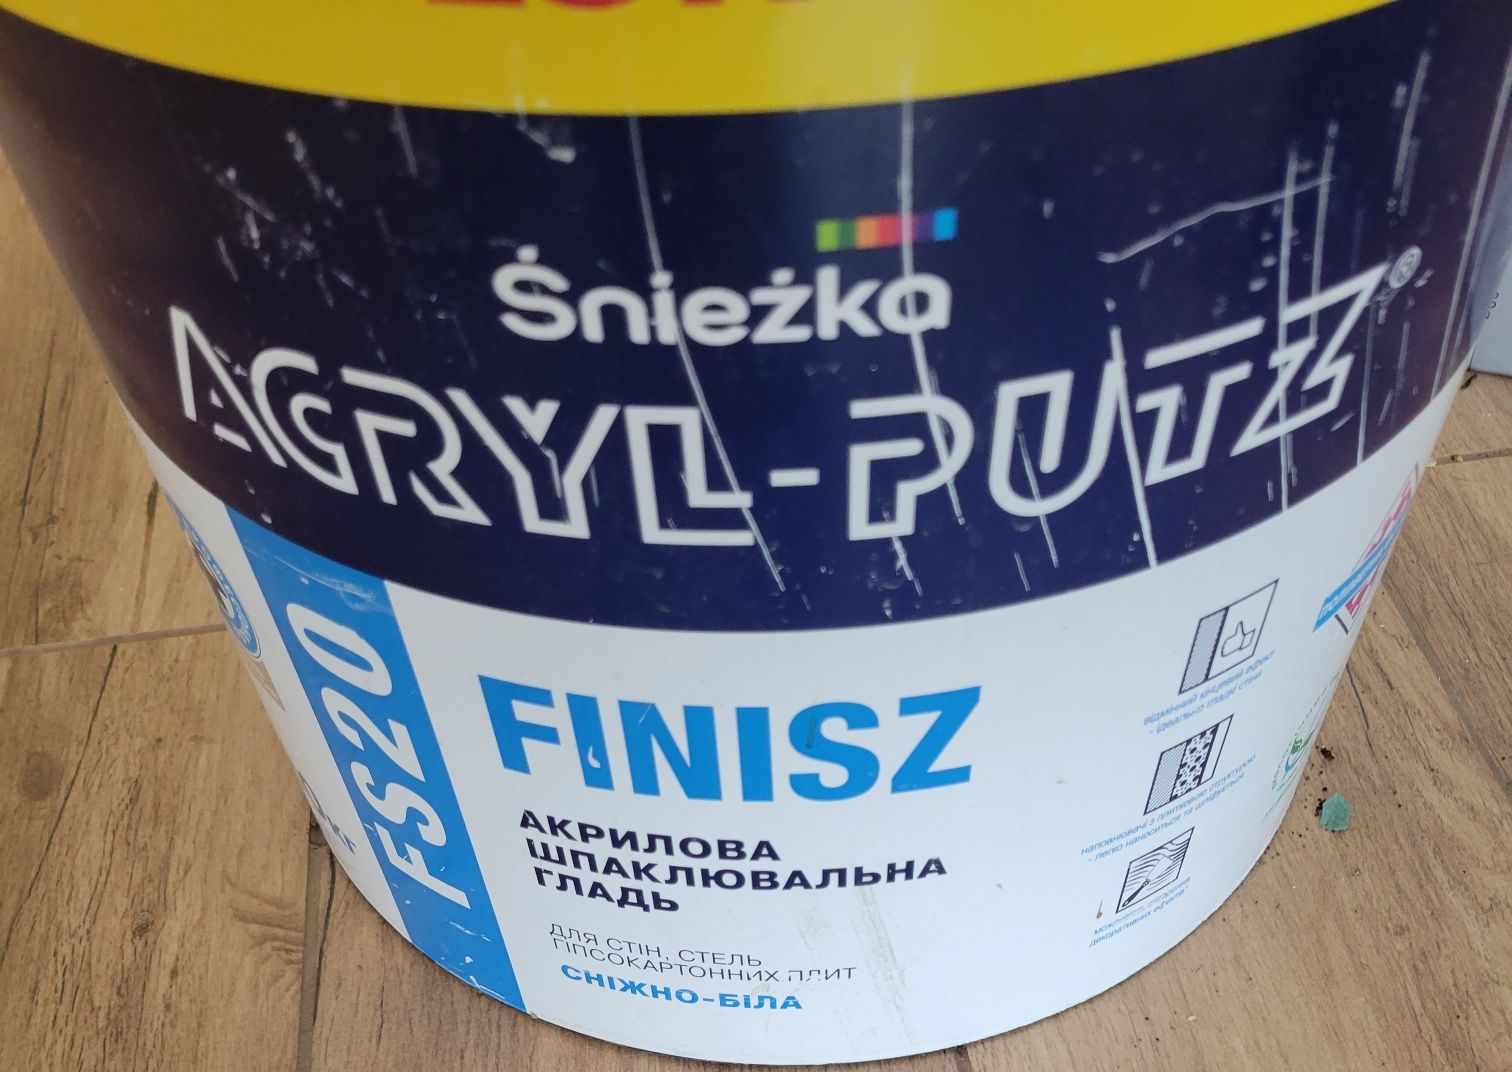 Шпаклевка Sniezka ACRYL-PUTZ FS20 27 кг